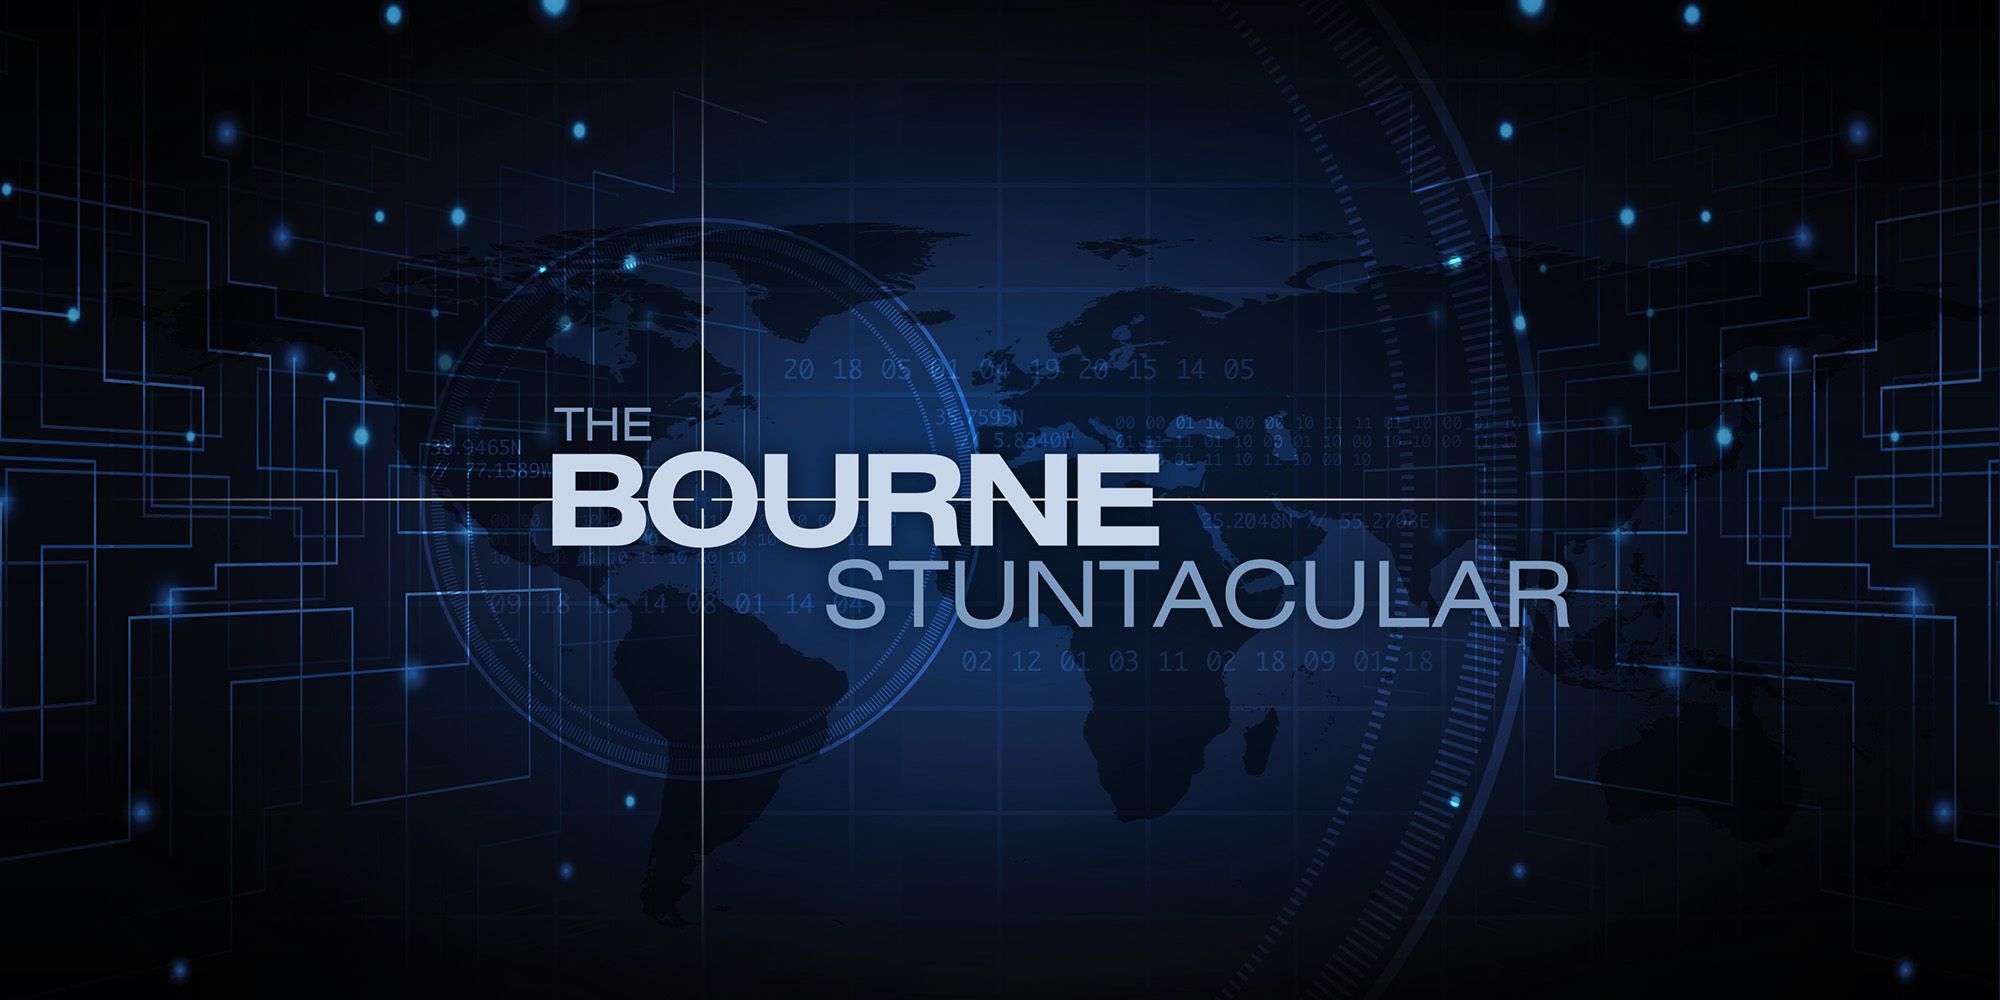 The Bourne Stuntacular at Universal Orlando